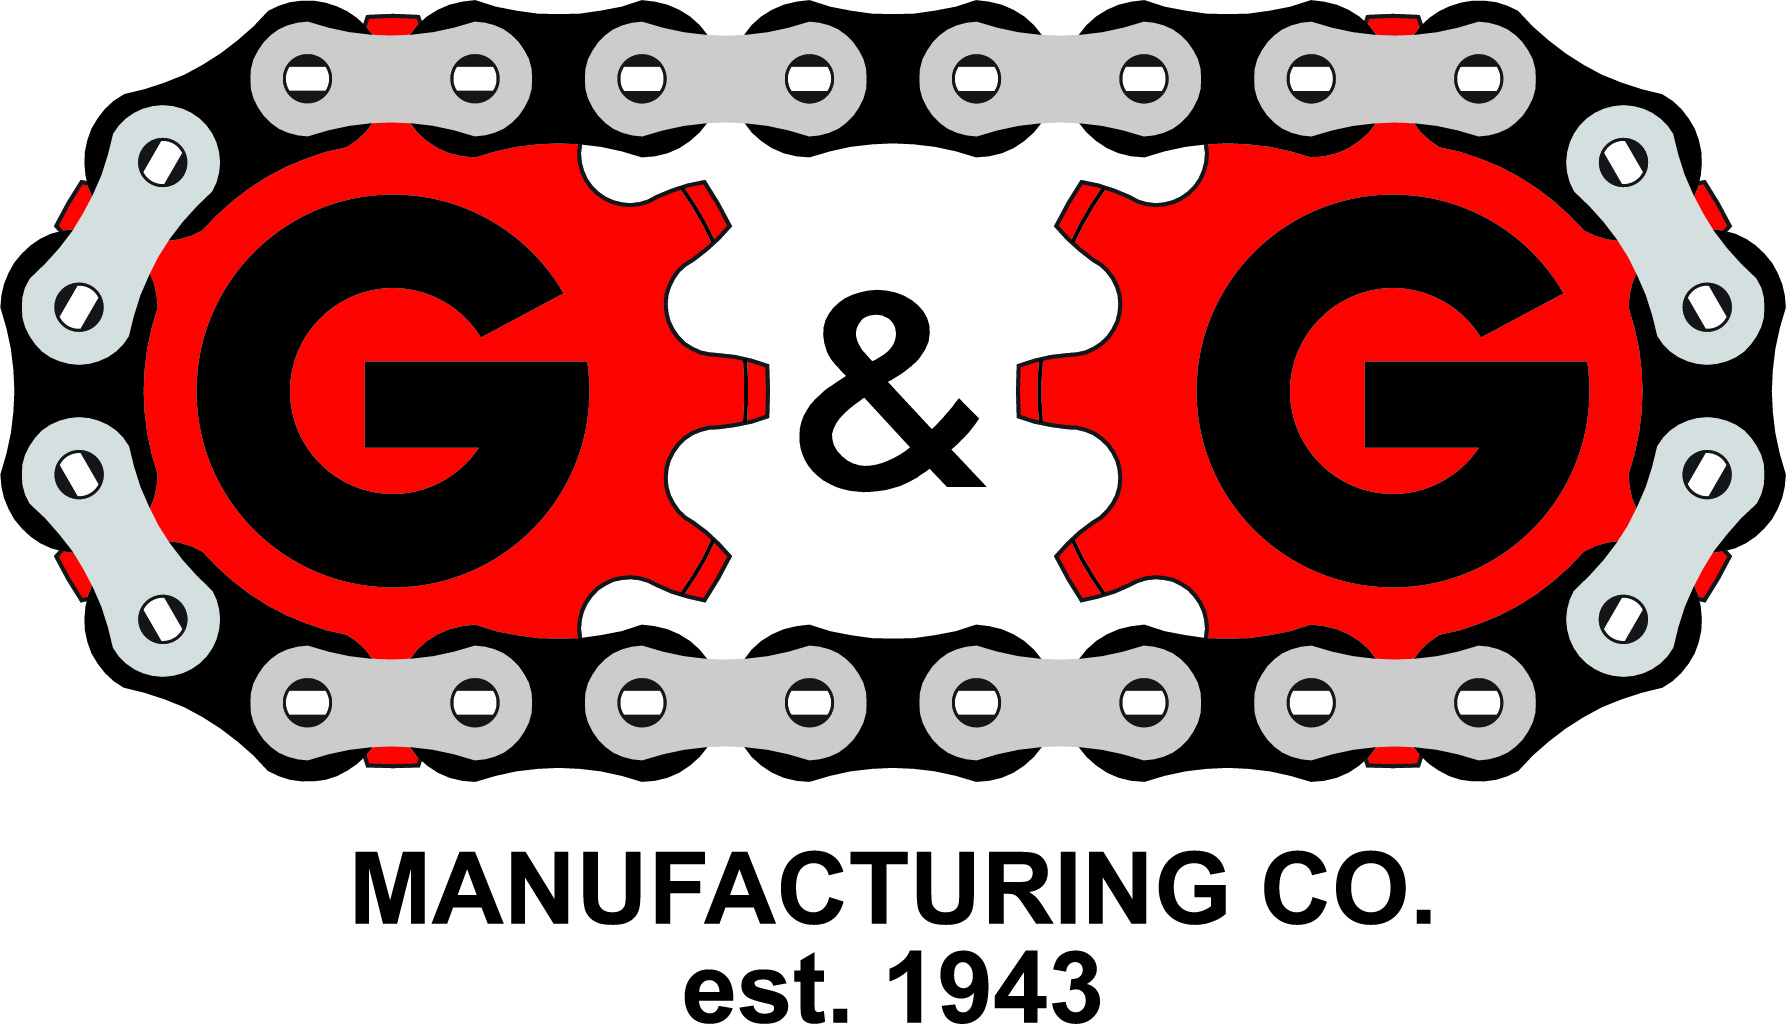 G&G Manufacturing